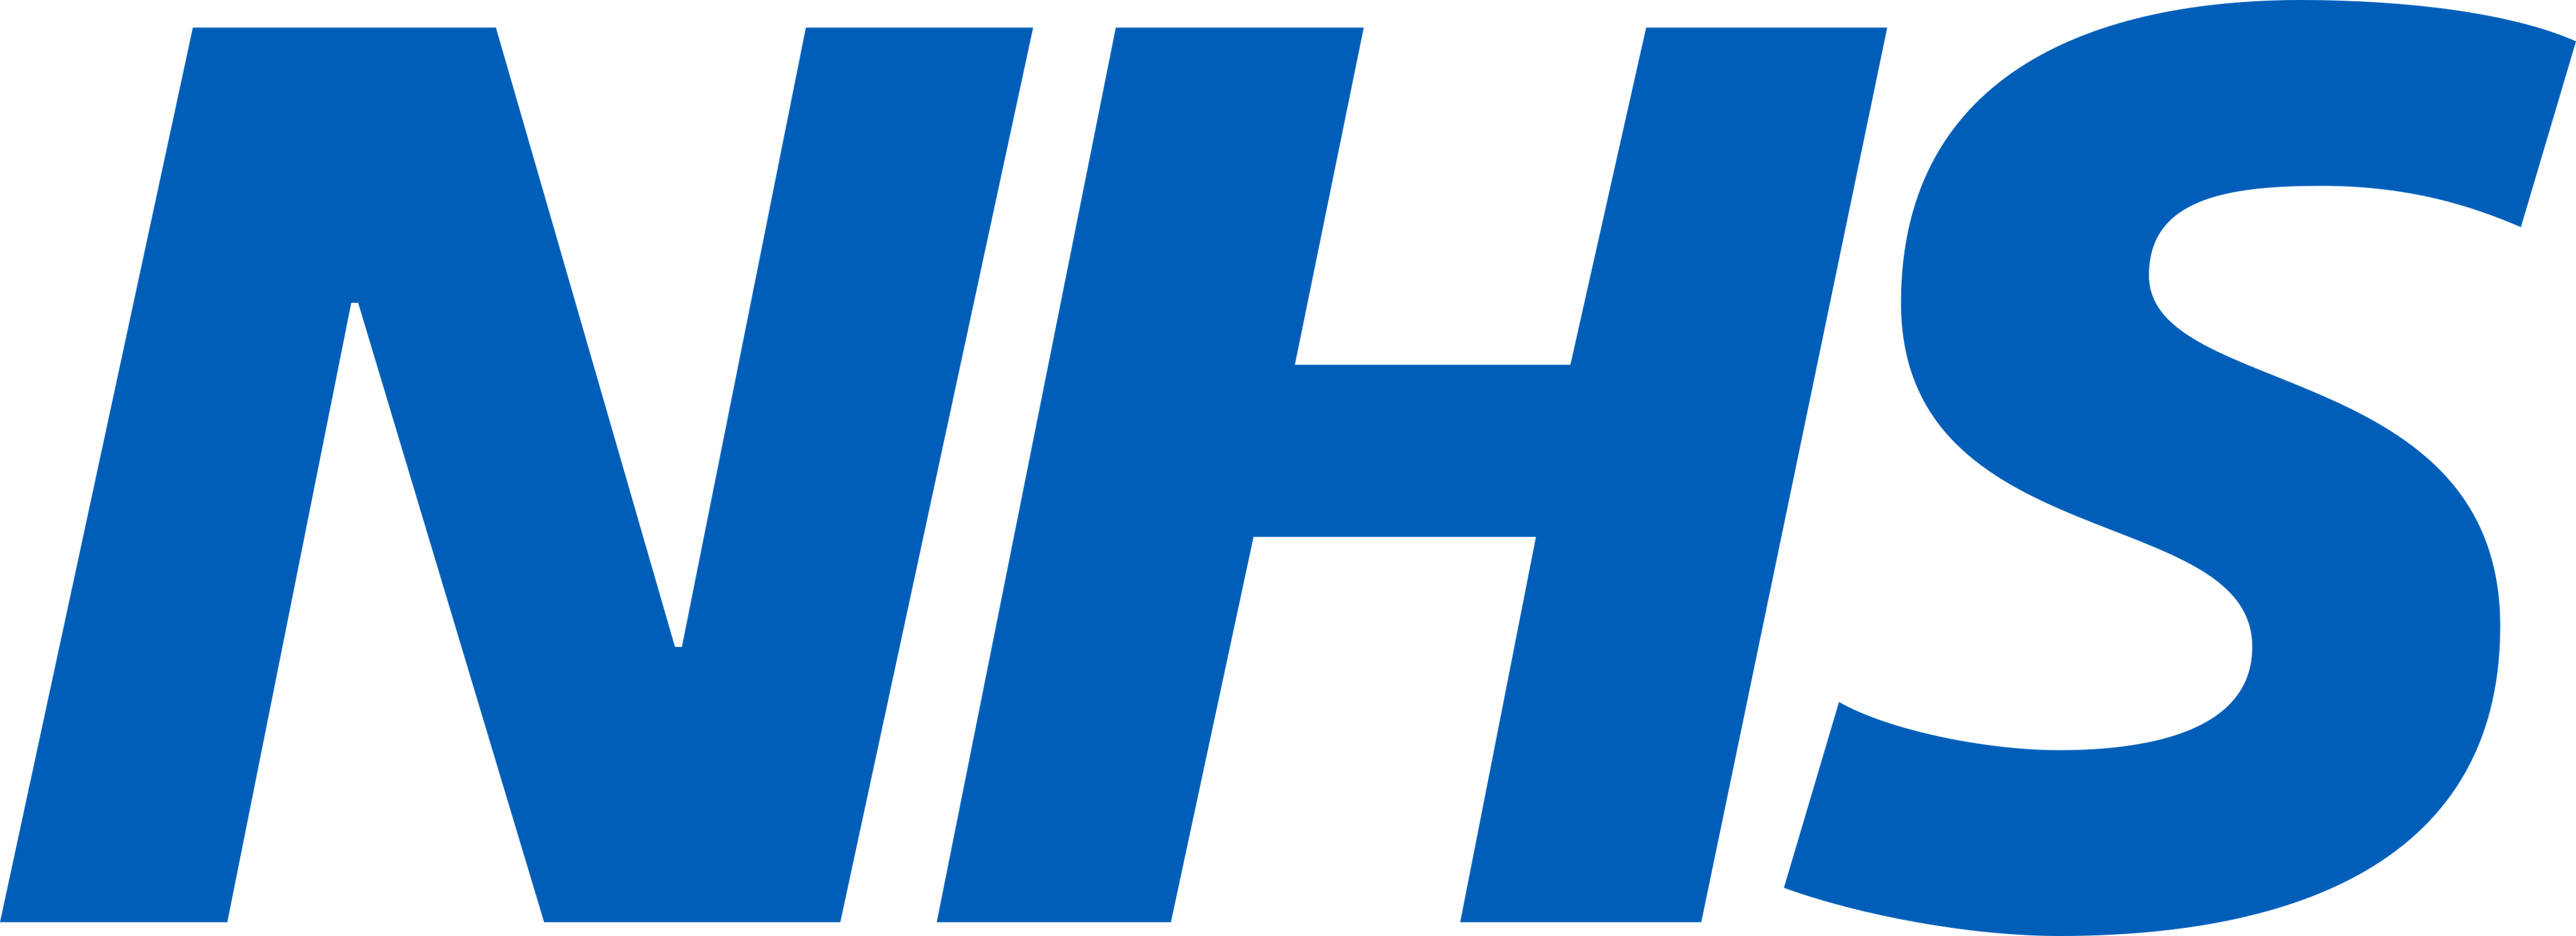 nhs-logo-1.png